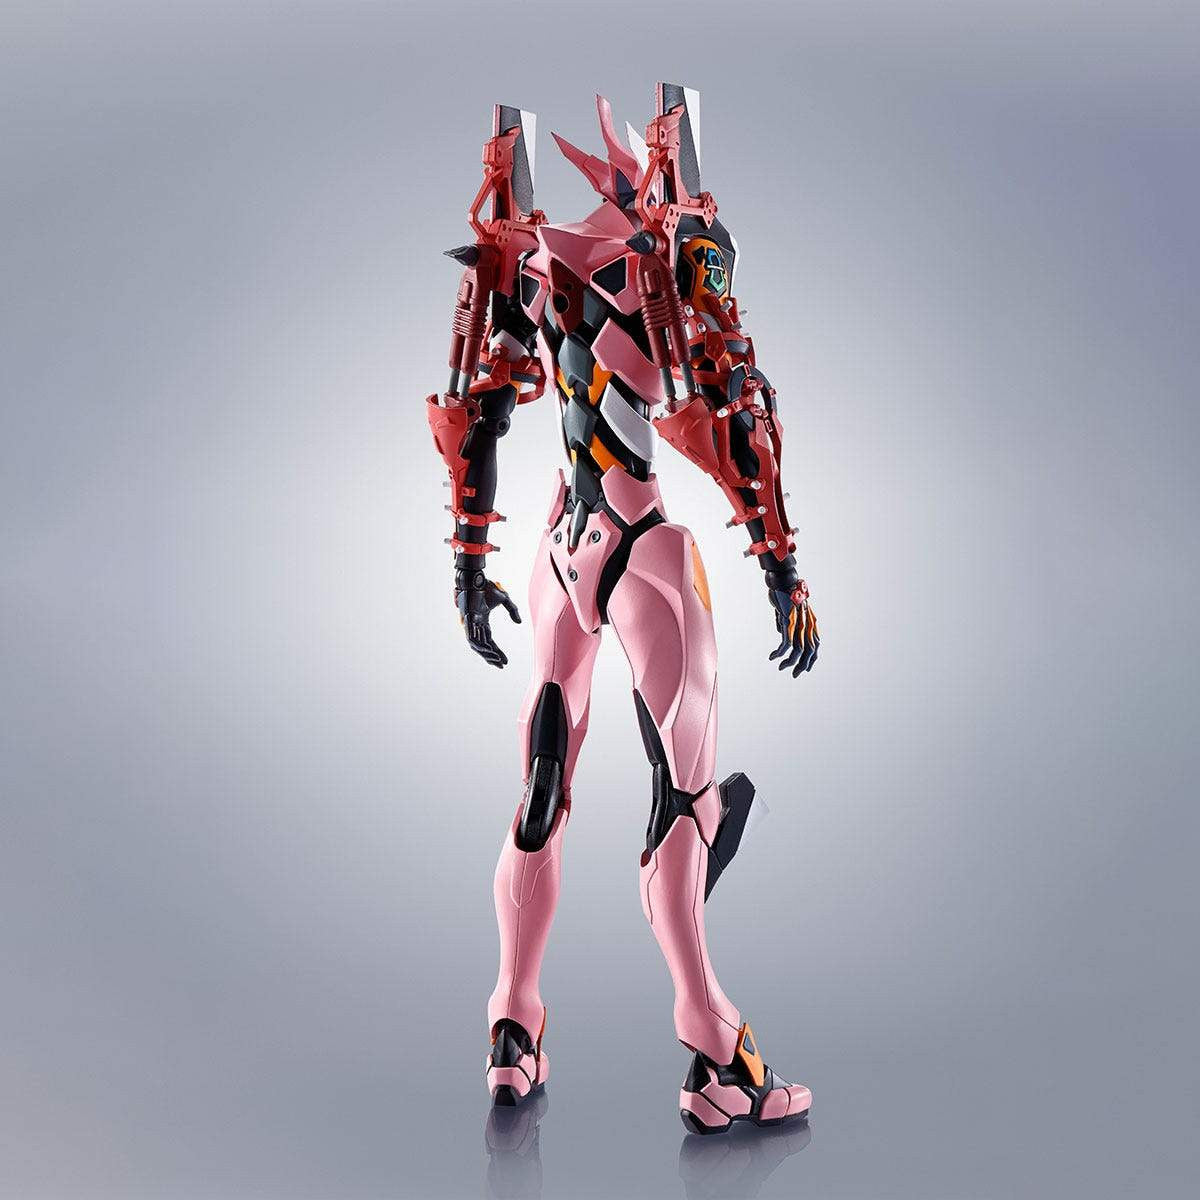 Evangelion - The Robot Spirits - Evangelion Production Model-08 Gamma